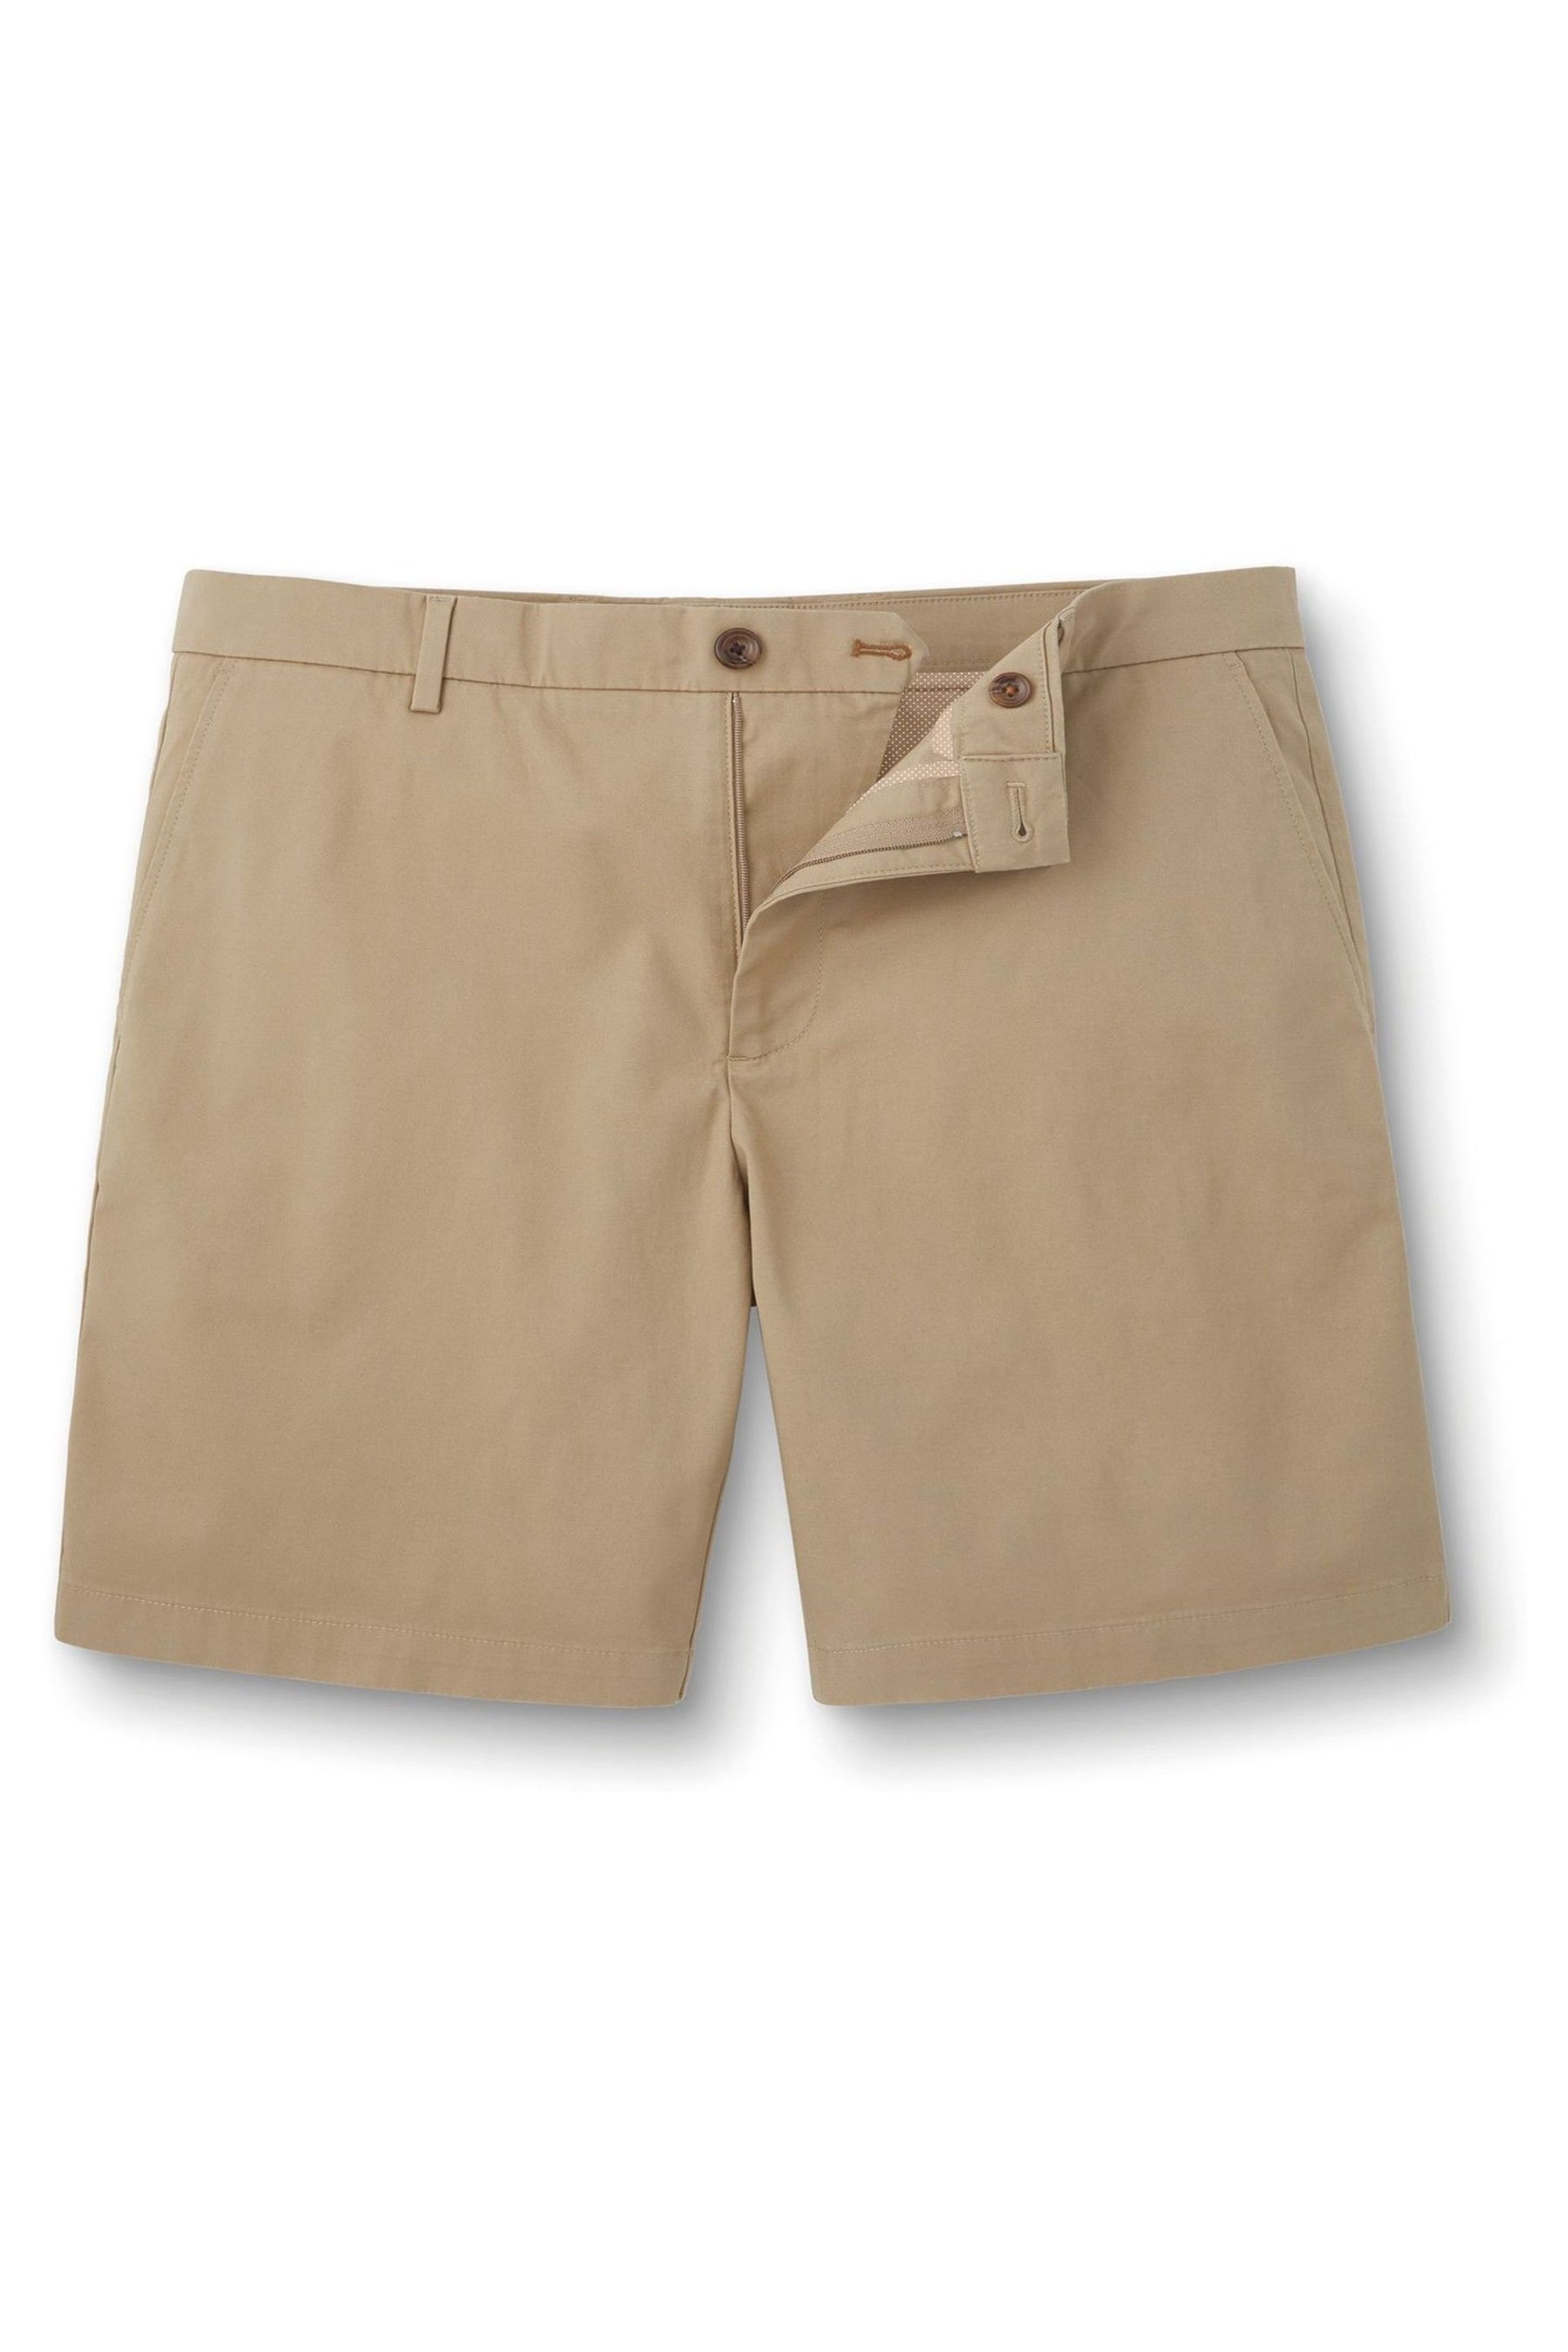 Charles Tyrwhitt Brown Cotton Shorts - Image 5 of 6